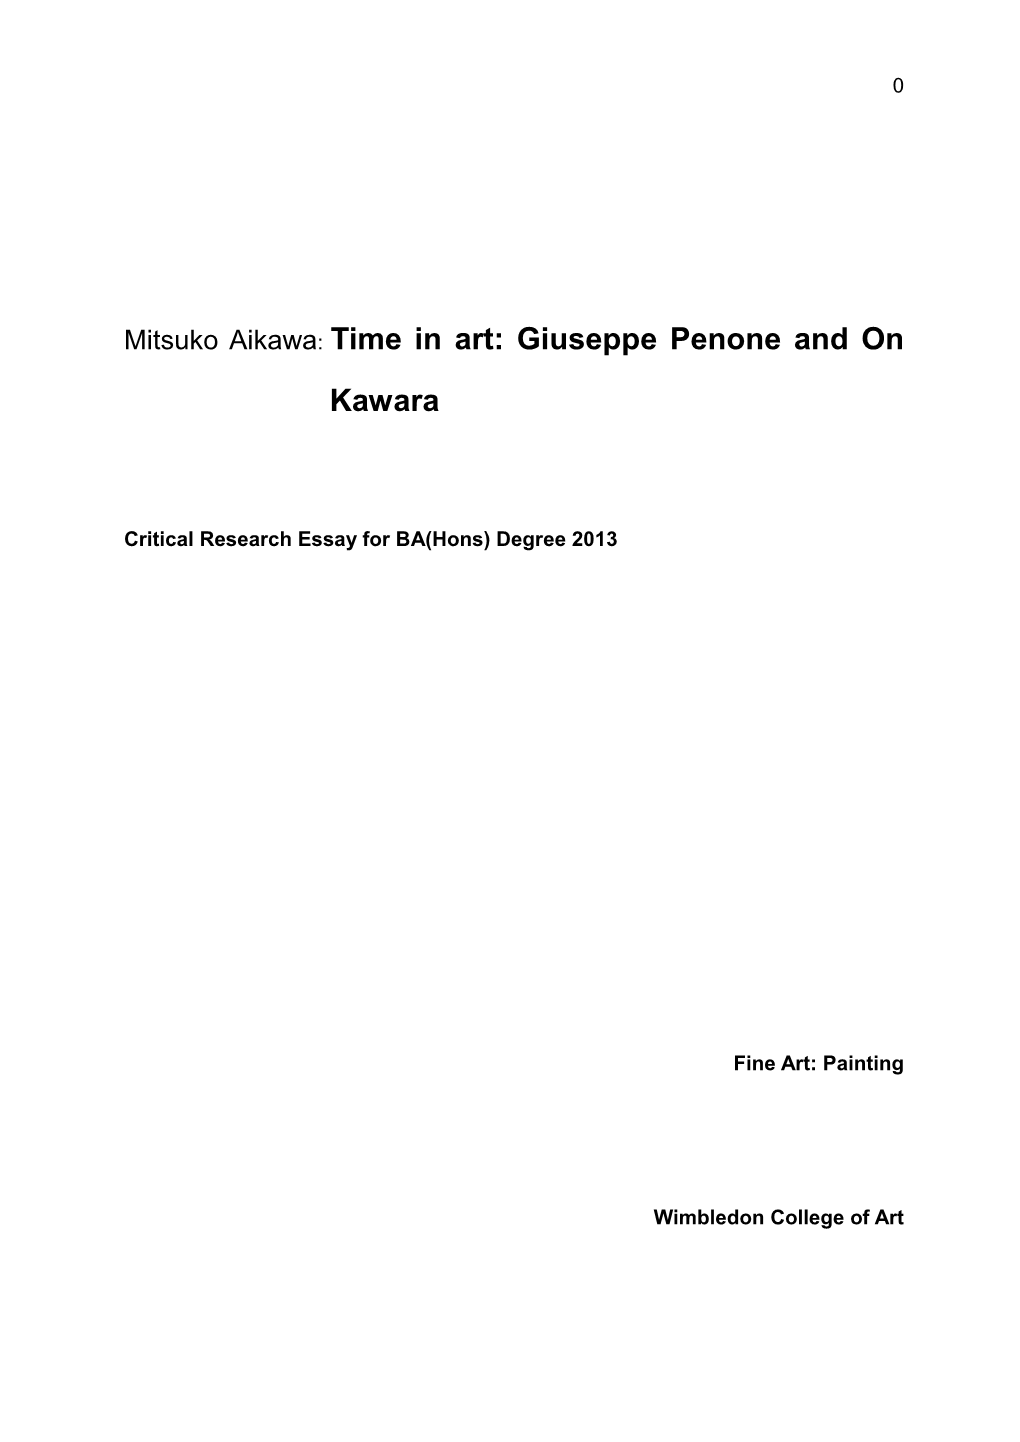 Giuseppe Penone and on Kawara